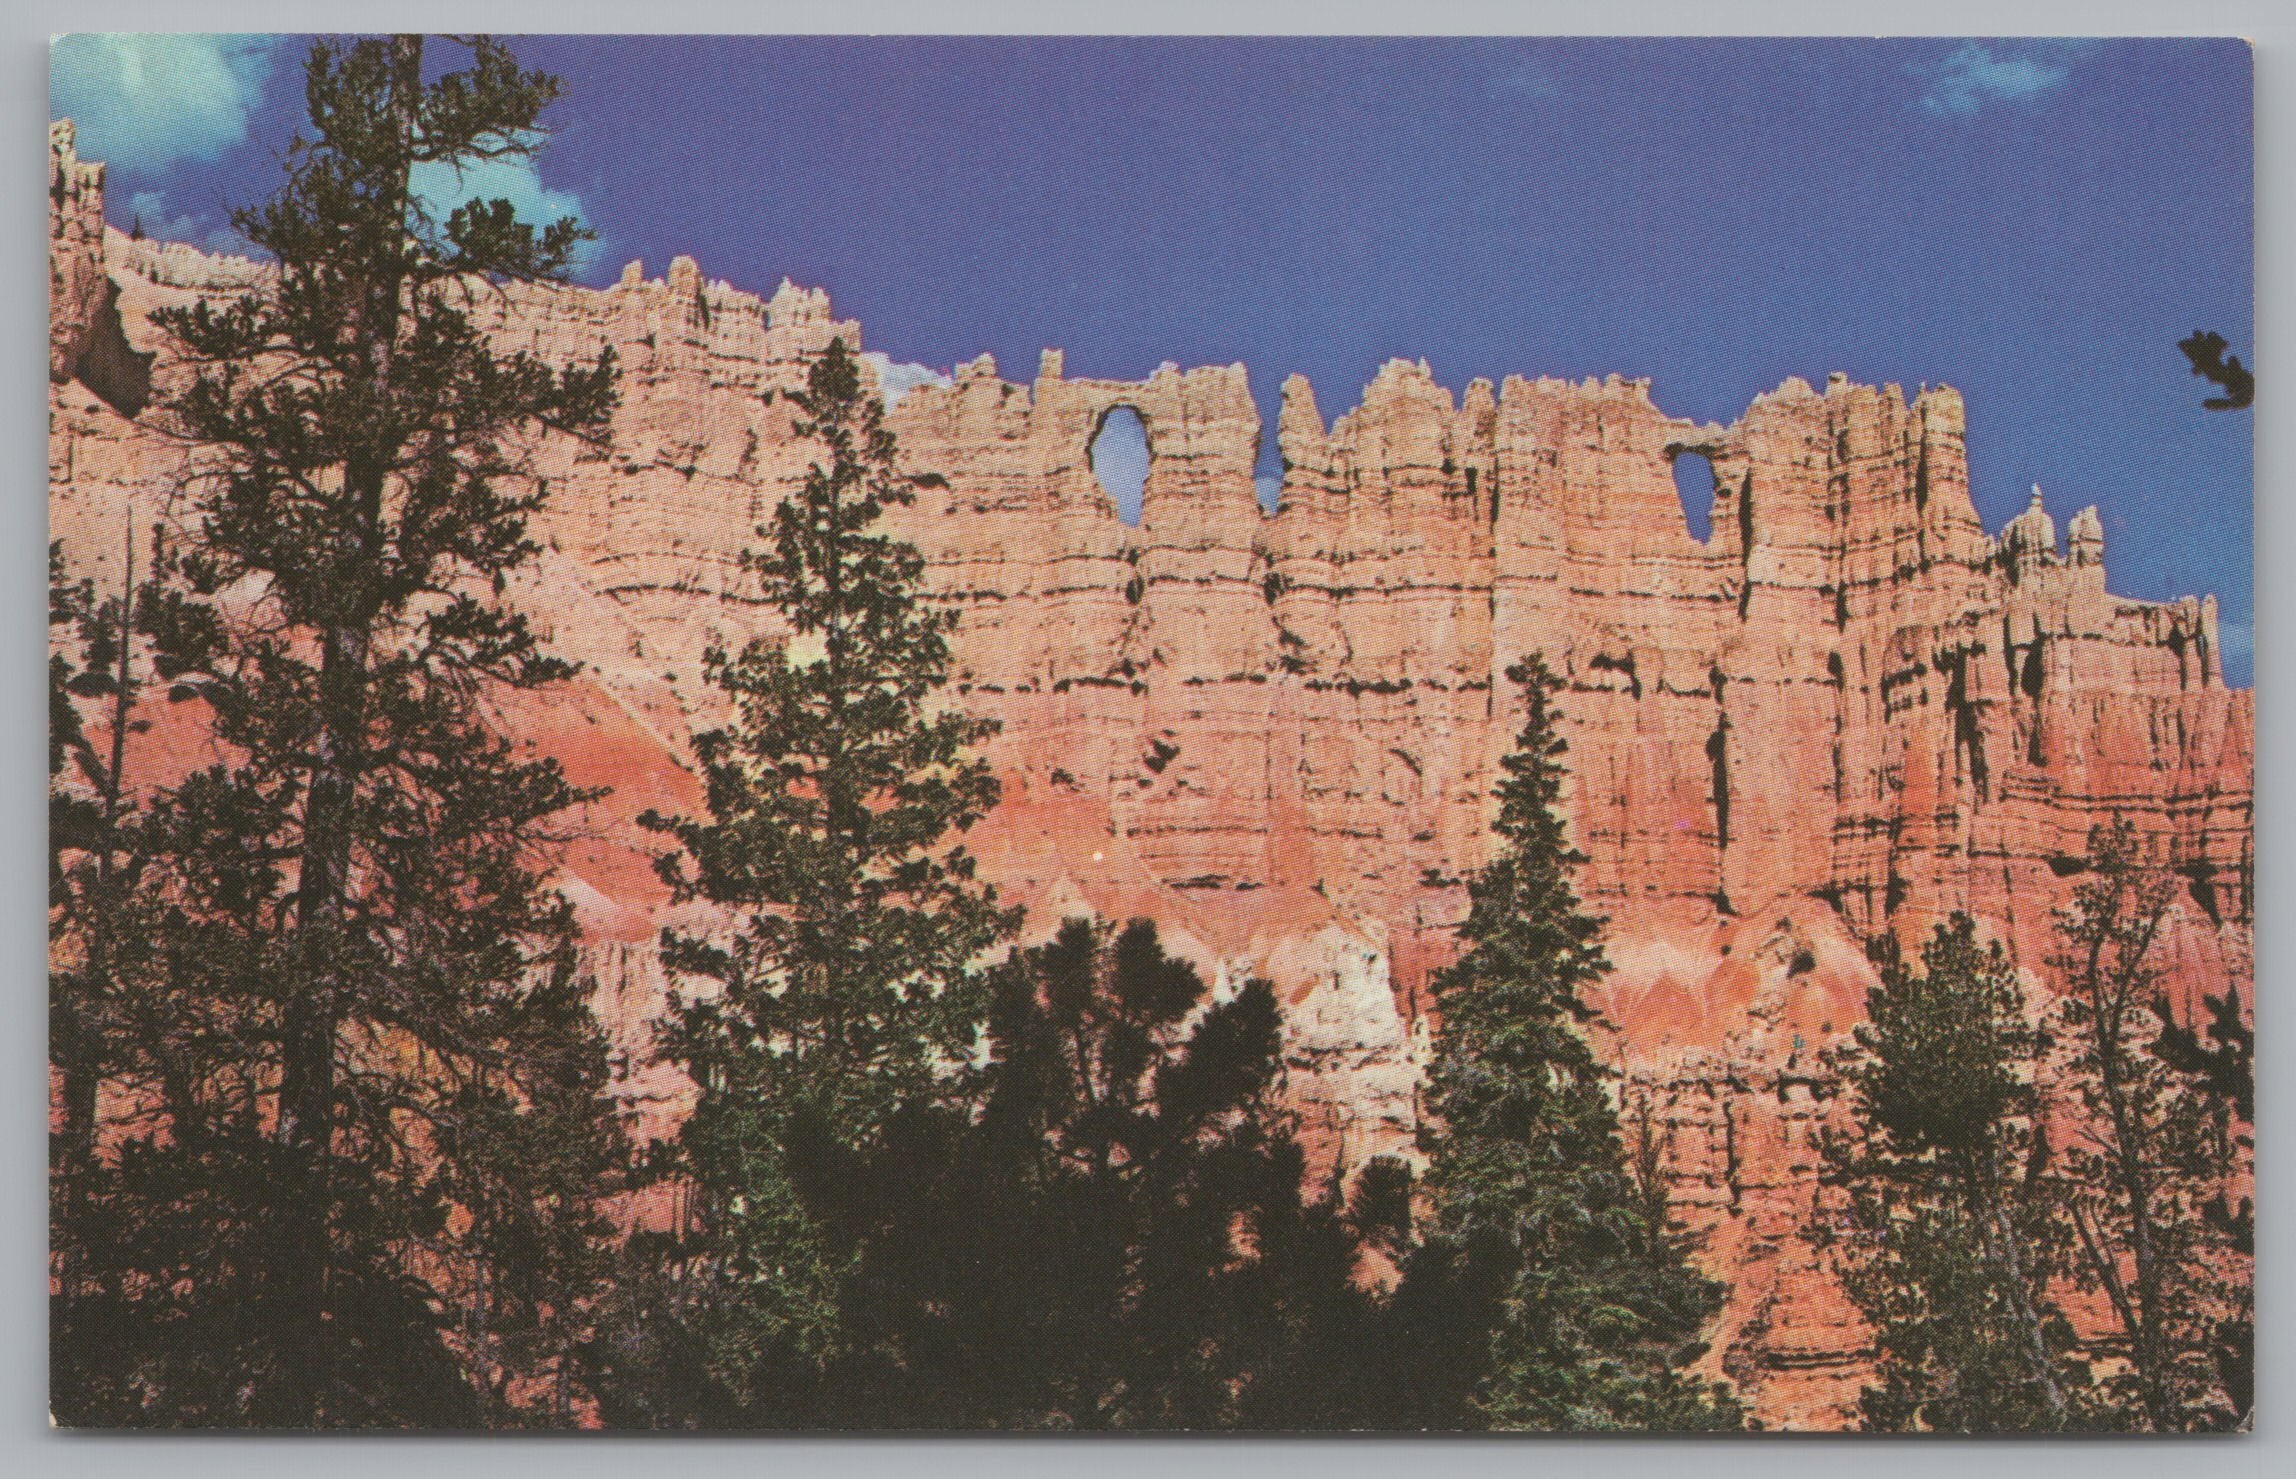 Wall Of Windows, Bryce Canyon National Park, Utah, USA, Vintage Post Card.